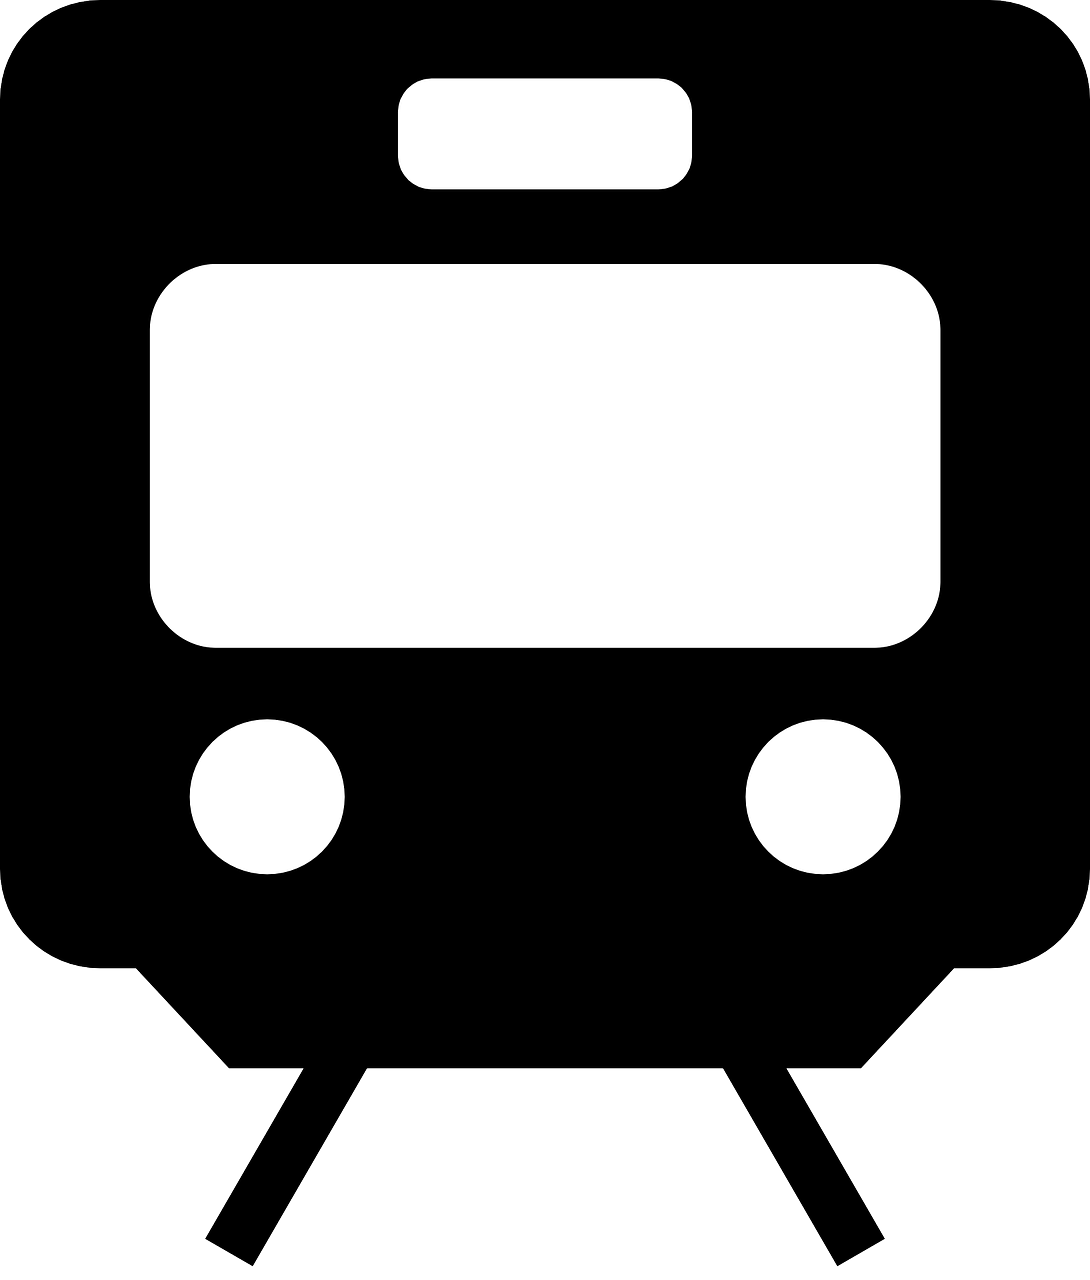 train pictogram symbol free photo